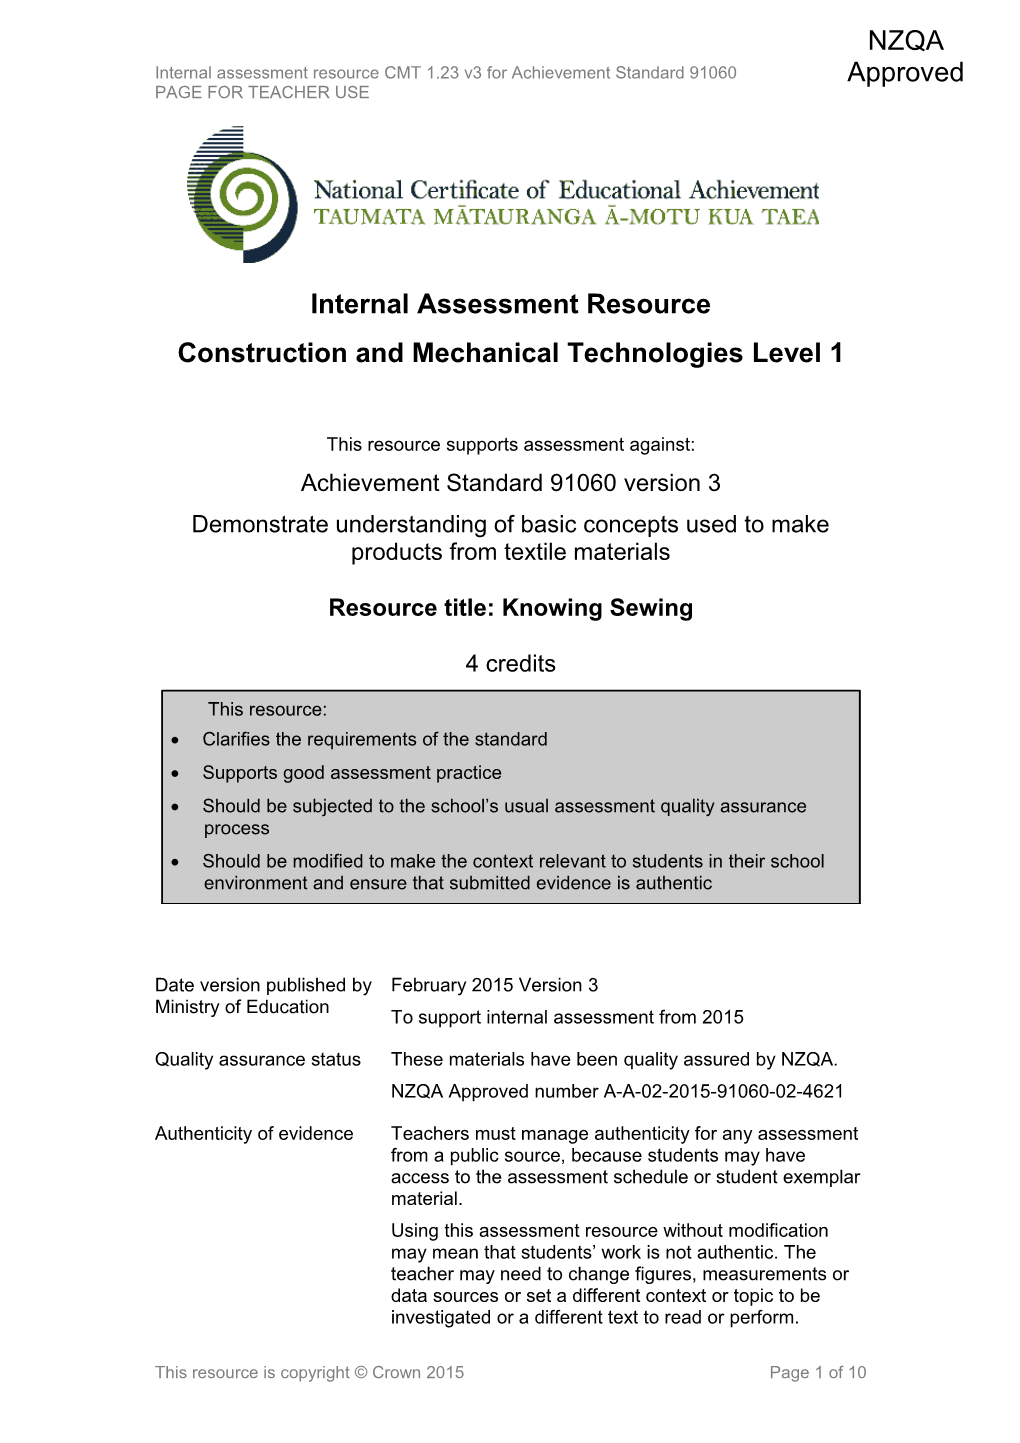 Level 1 Construction and Mechanical Technologies Internal Assessment Resource